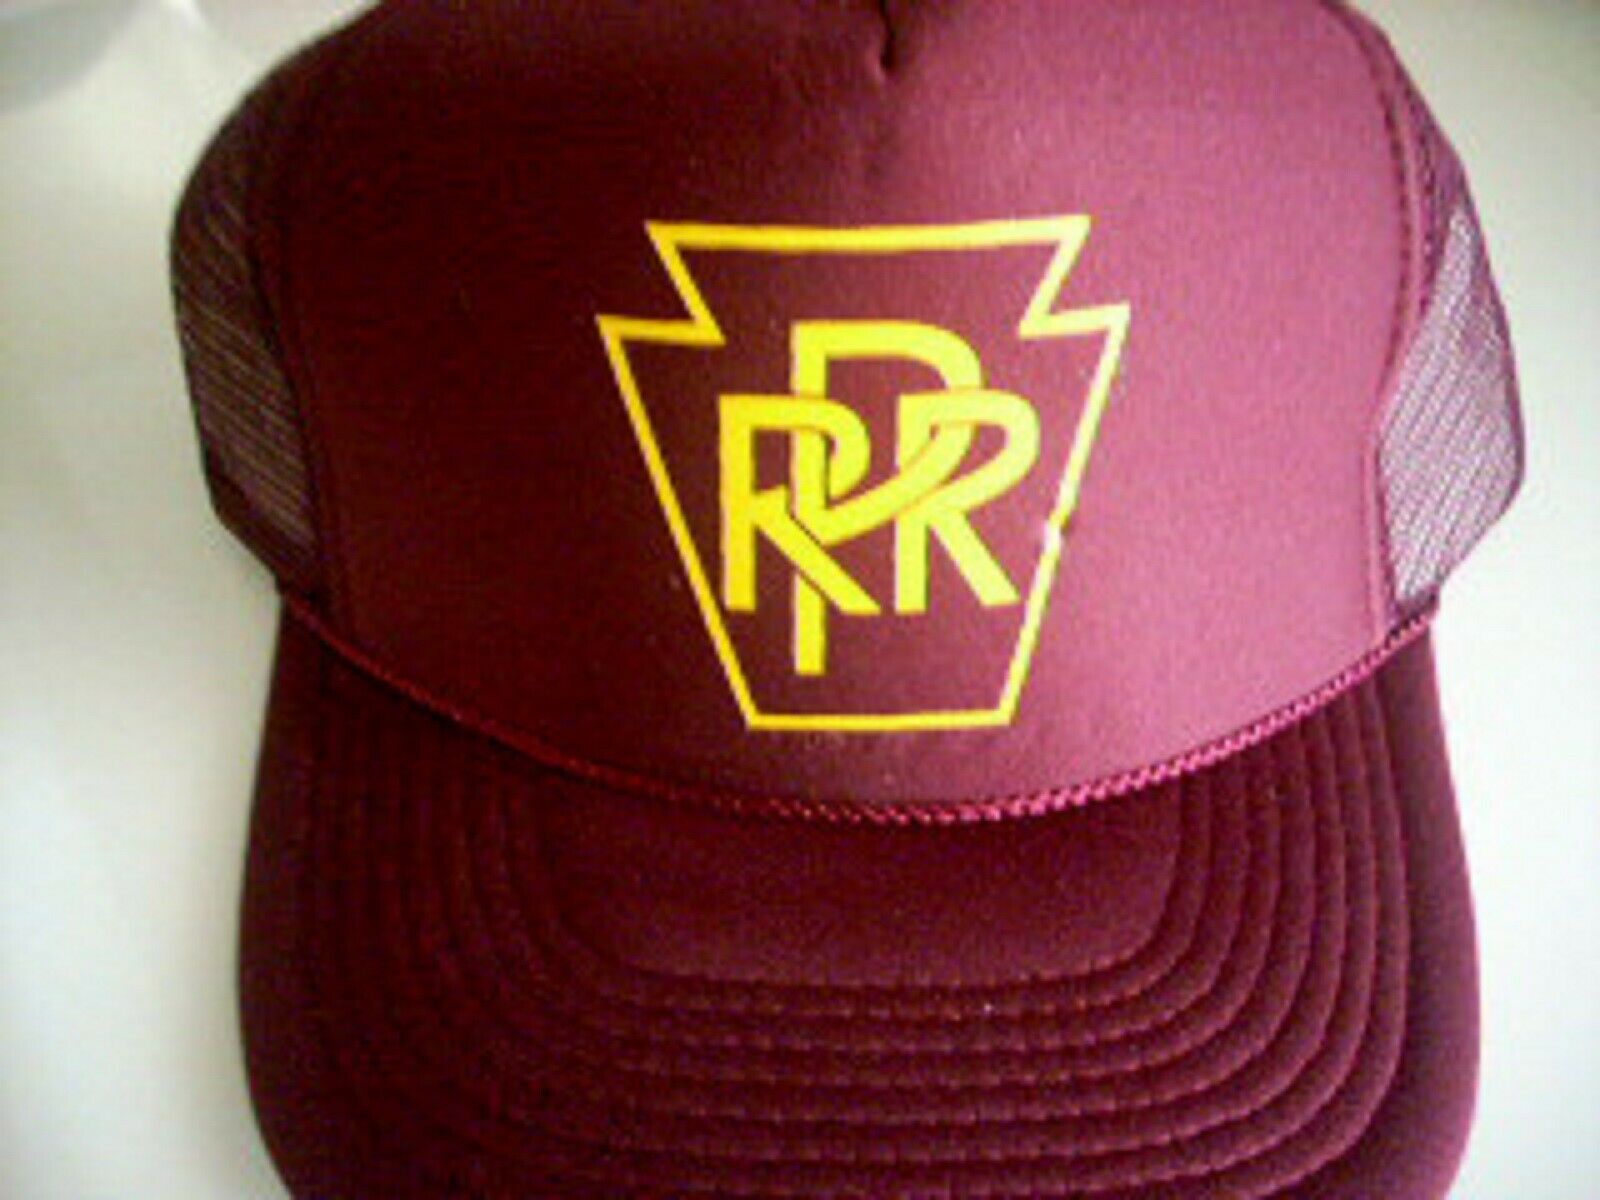 Pennsylvania ( Prr ) Railroad / Train Hat - Brand New!